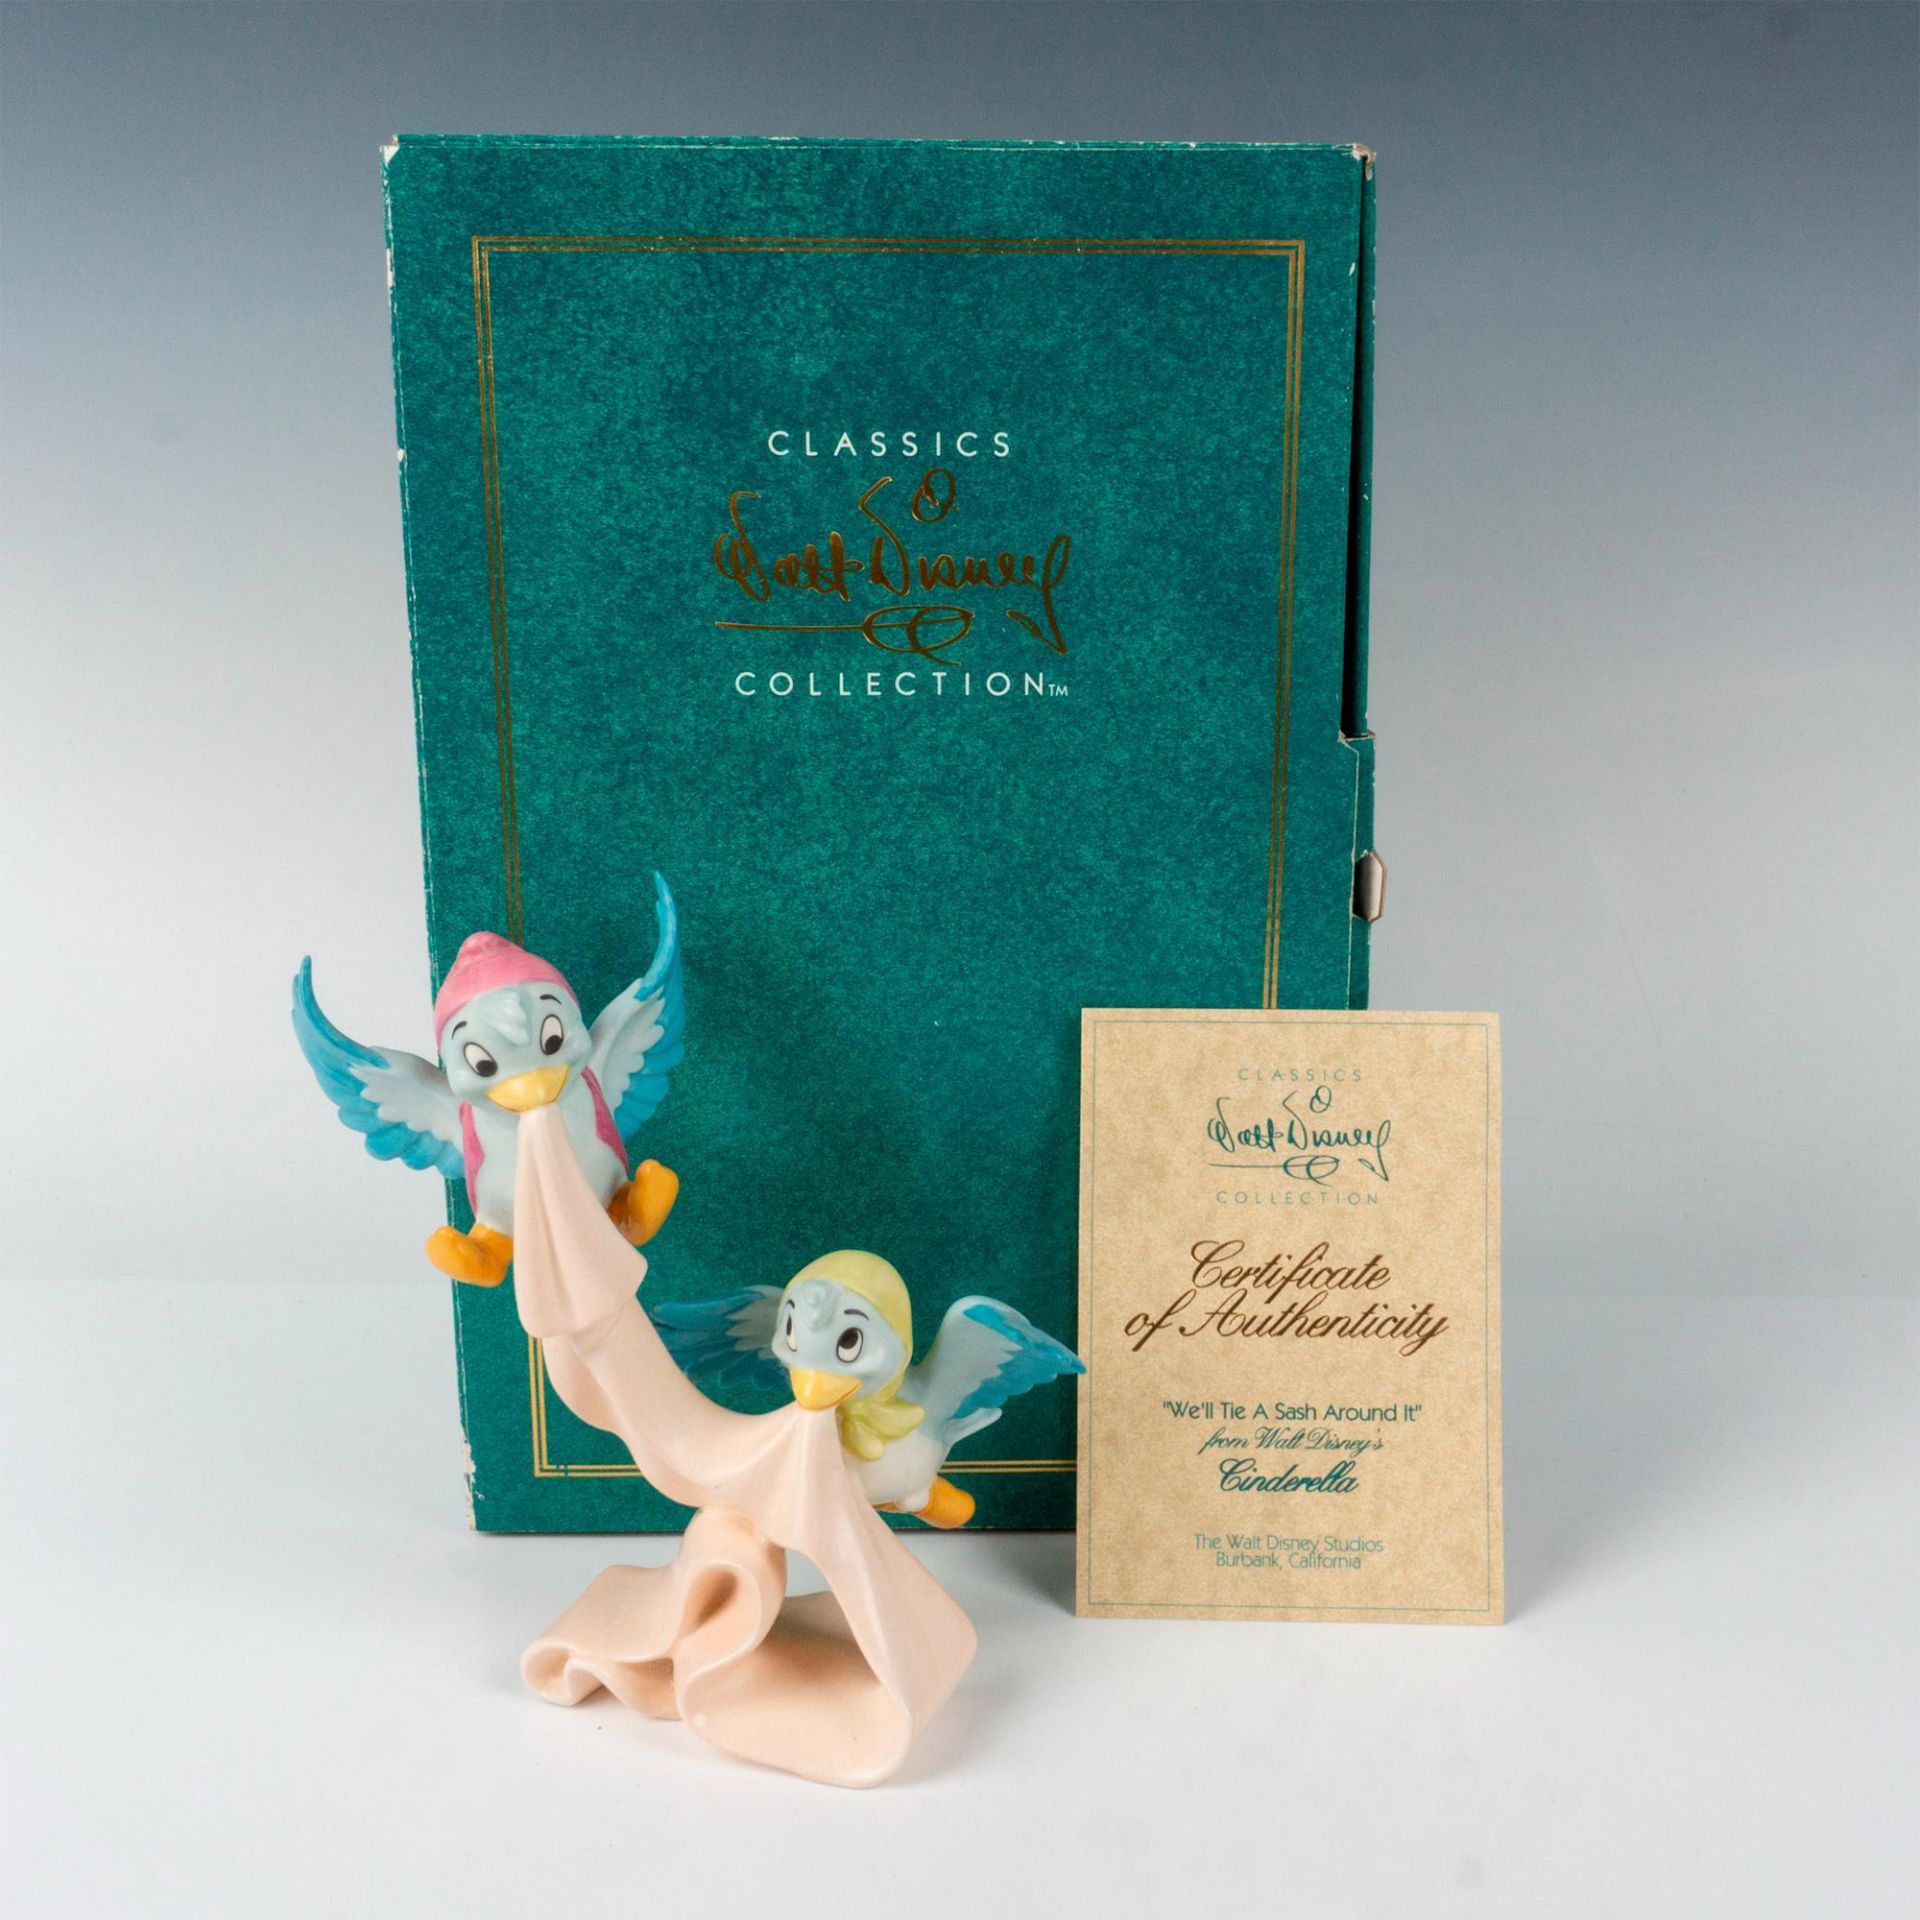 Walt Disney Classics Collection Figurine, Birds with Sash - Image 4 of 4